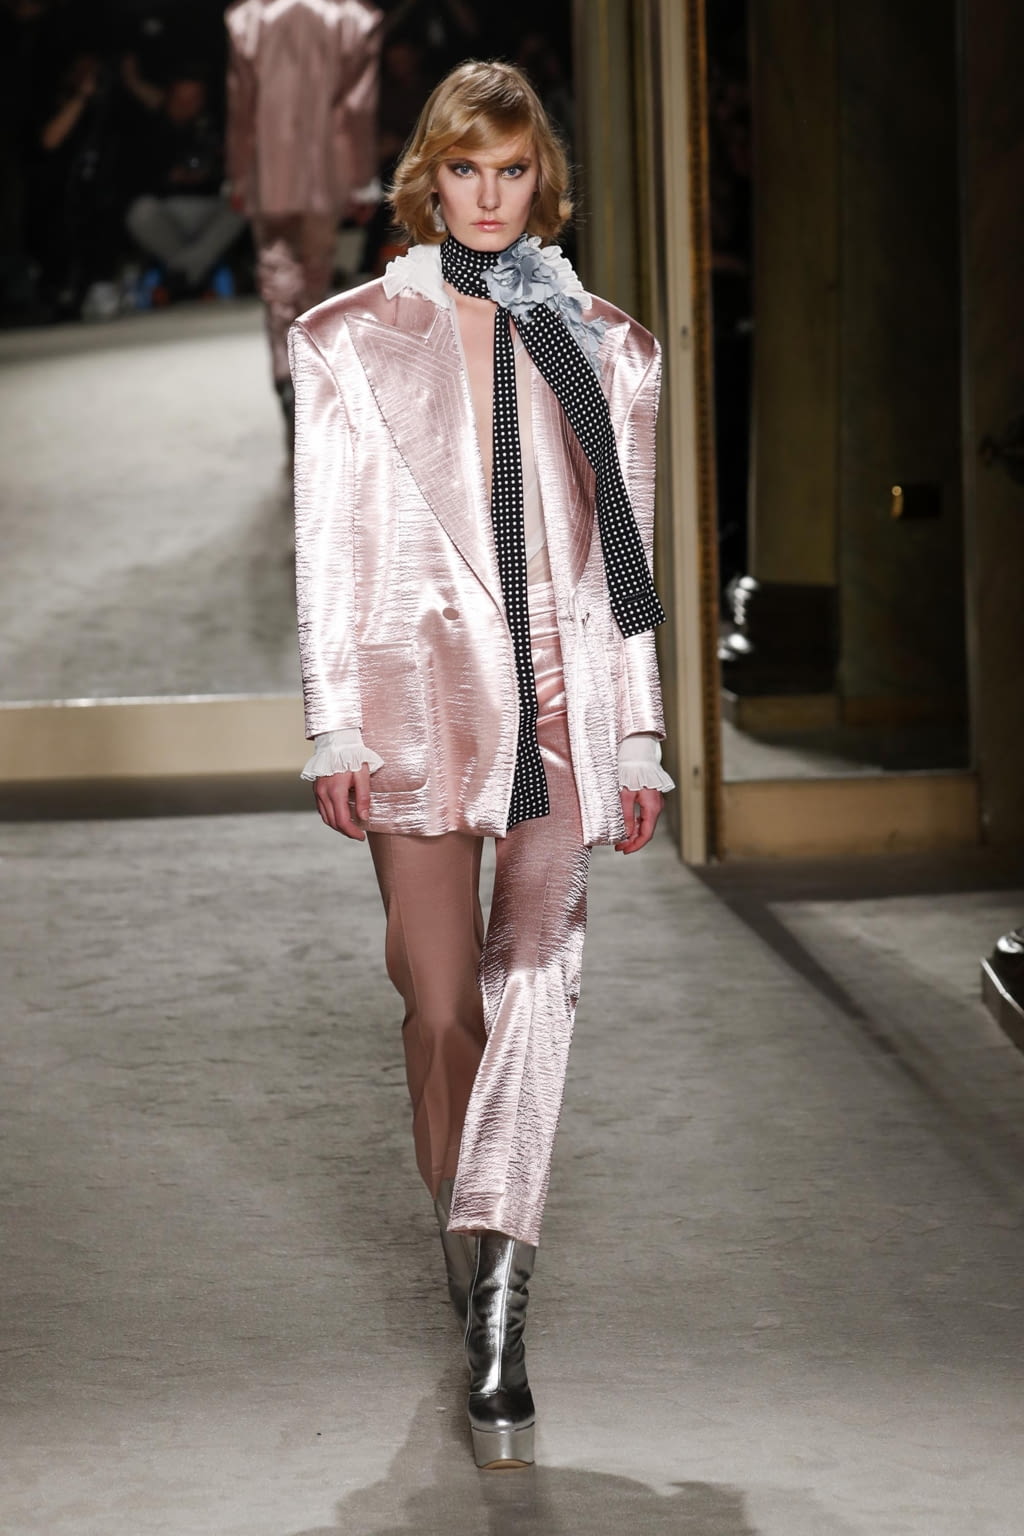 Louis Vuitton FW20 menswear #44 - Tagwalk: The Fashion Search Engine